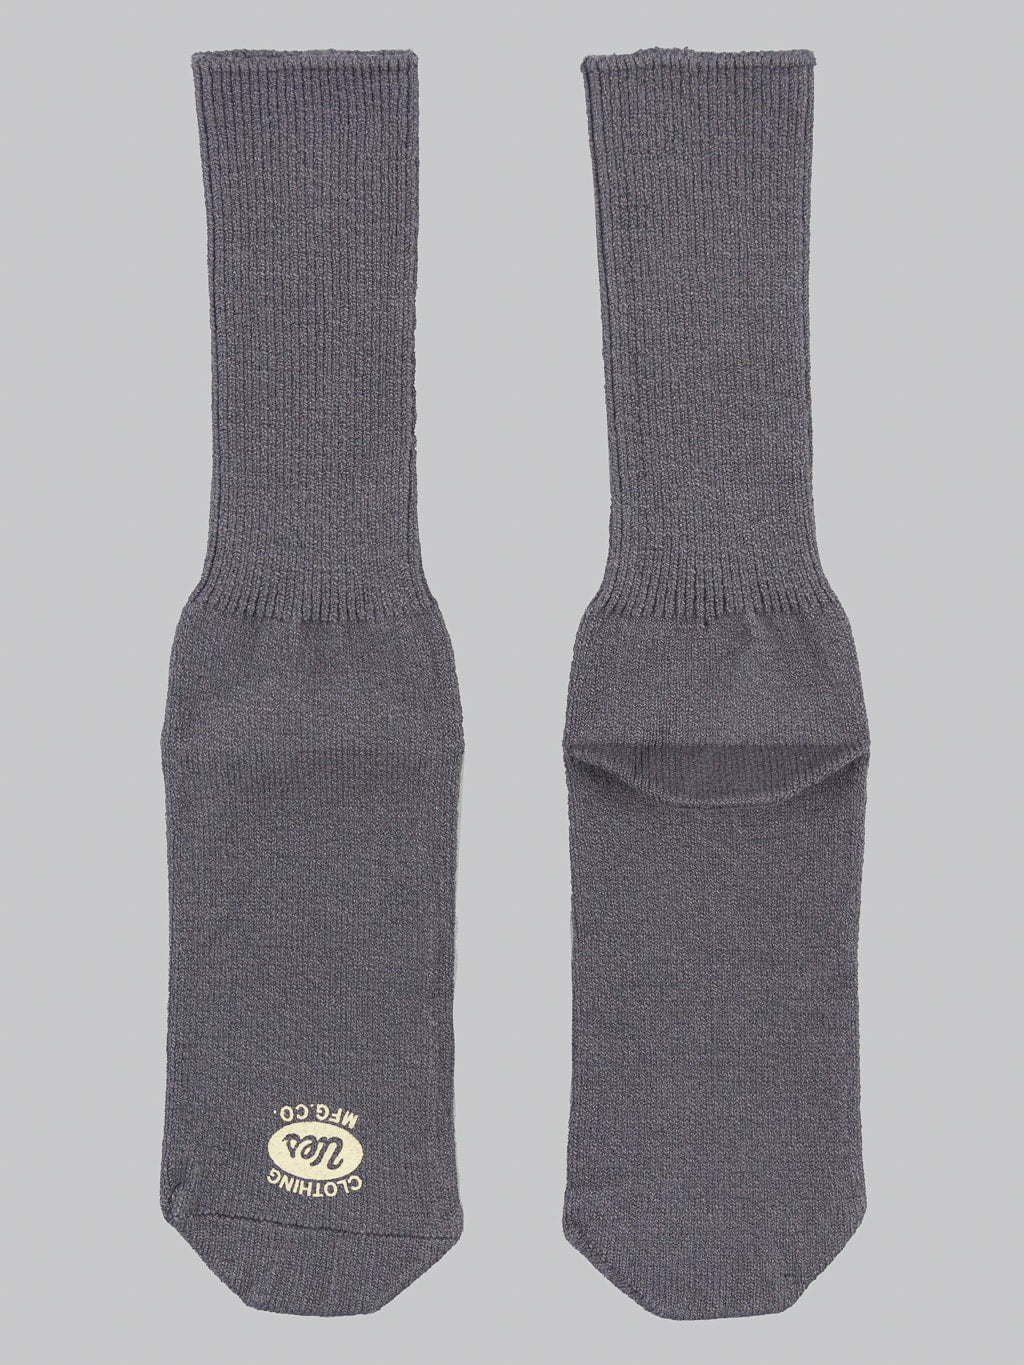 UES Yarn Unevess Three Ply Socks Grey durable